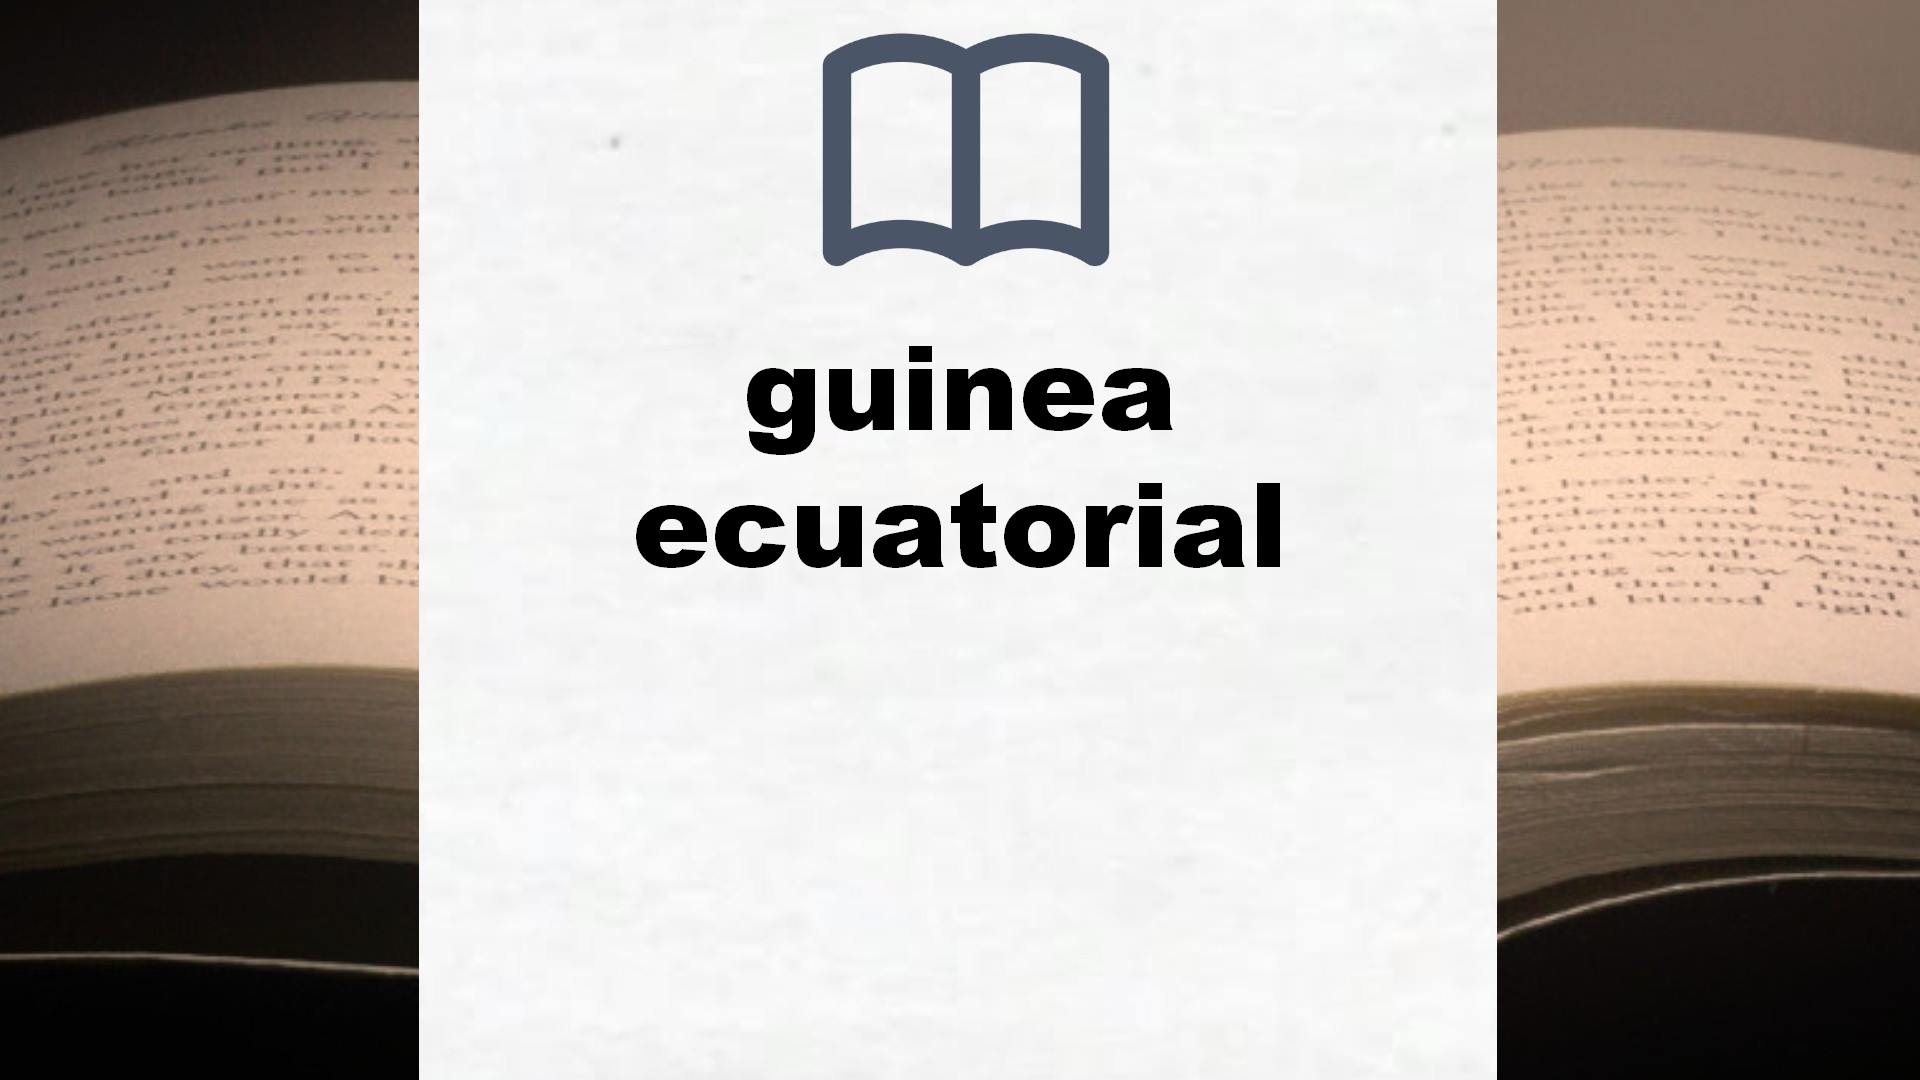 Libros sobre guinea ecuatorial